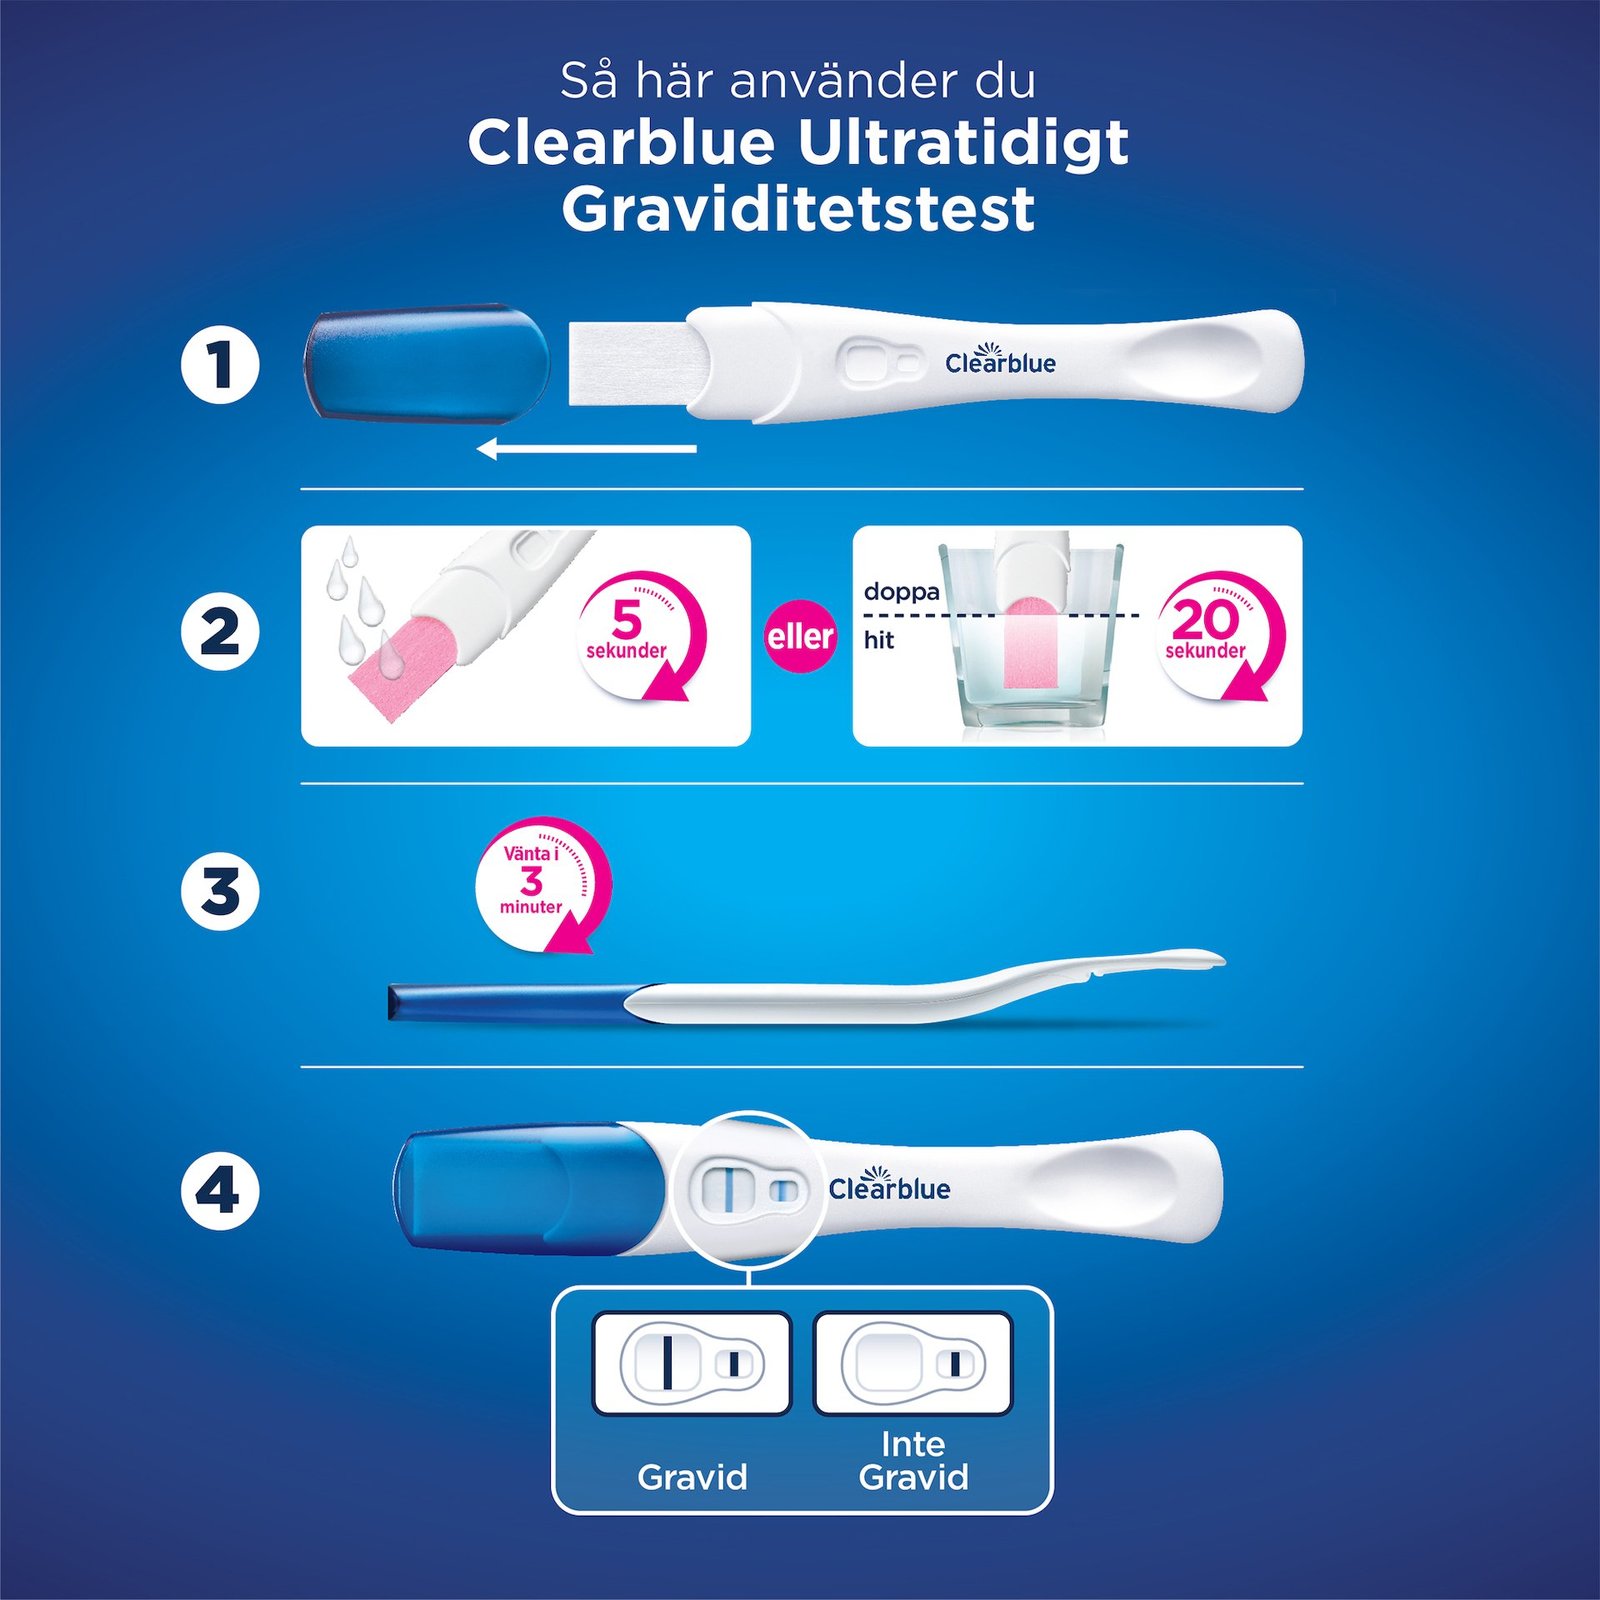 Clearblue Ultratidigt Graviditetstest 6 dagar tidigare 1 st